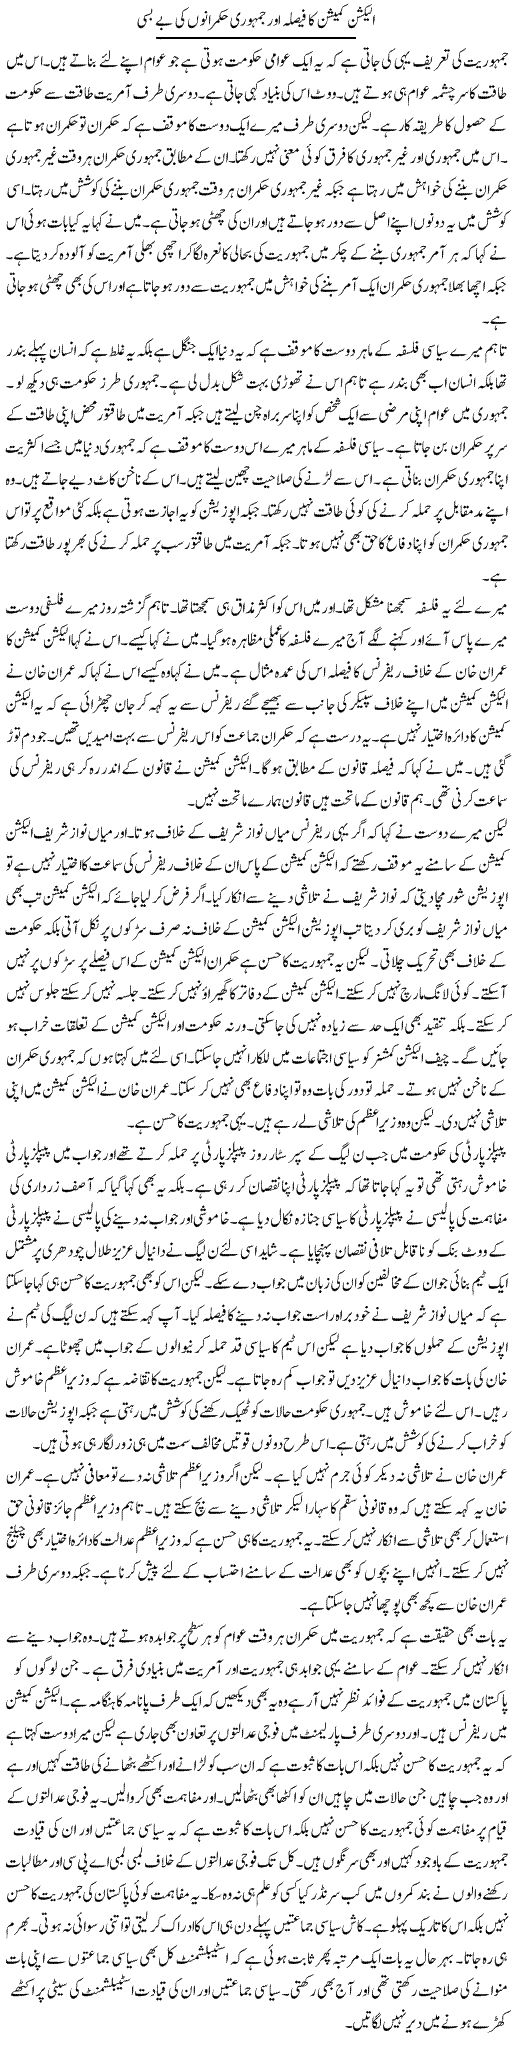 Election Commission Ka Faisla Aur Jamhoori Hukmarano Ki Be Basi | Muzamal Suharwardy | Daily Urdu Columns